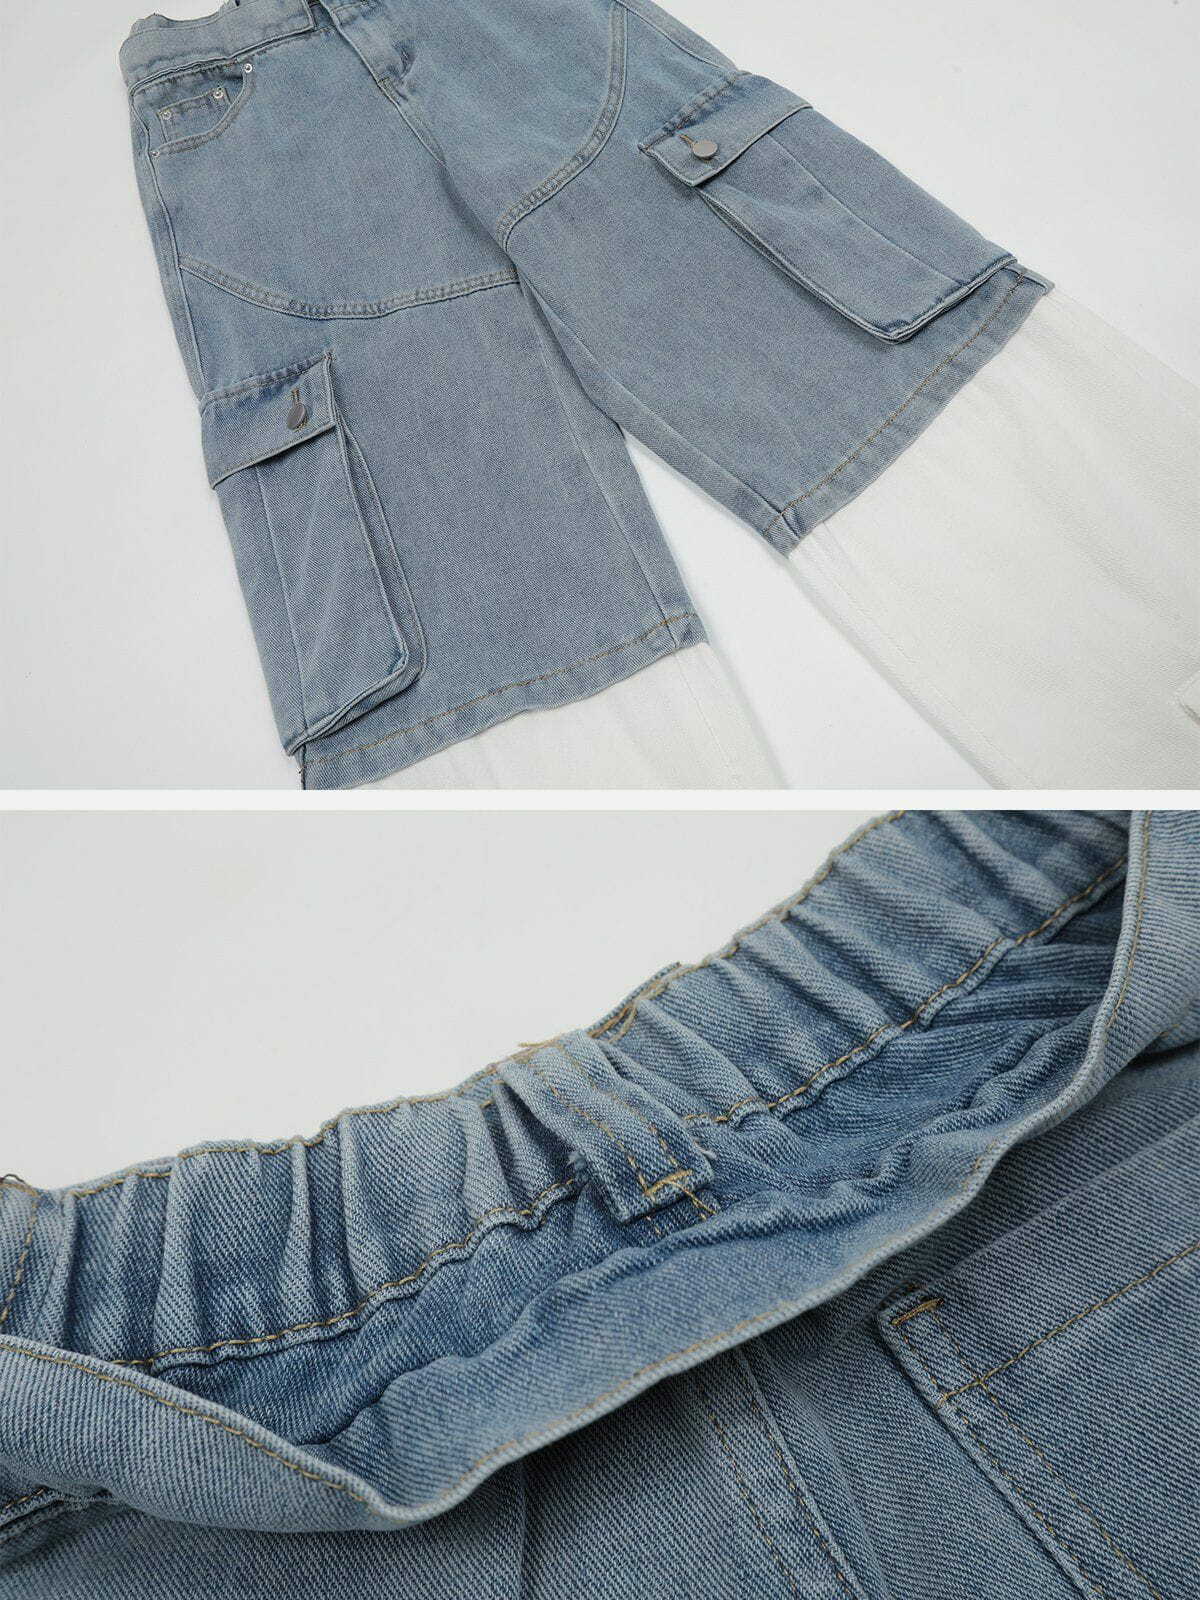 patchwork denim jeans vintage & edgy urban style 1785